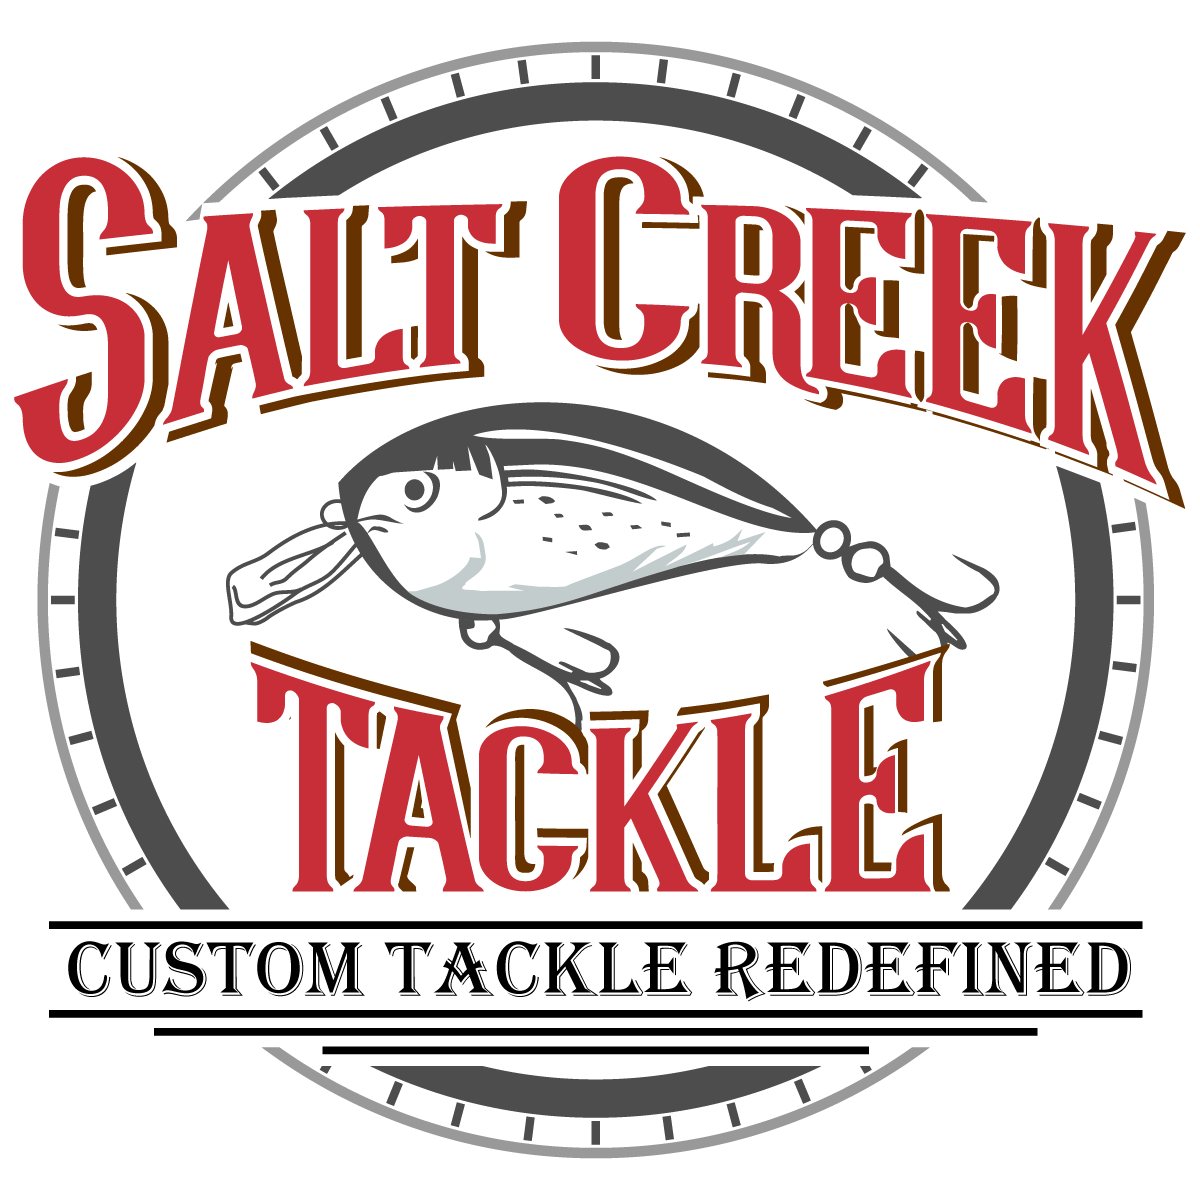 Store 2 — Salt Creek Tackle